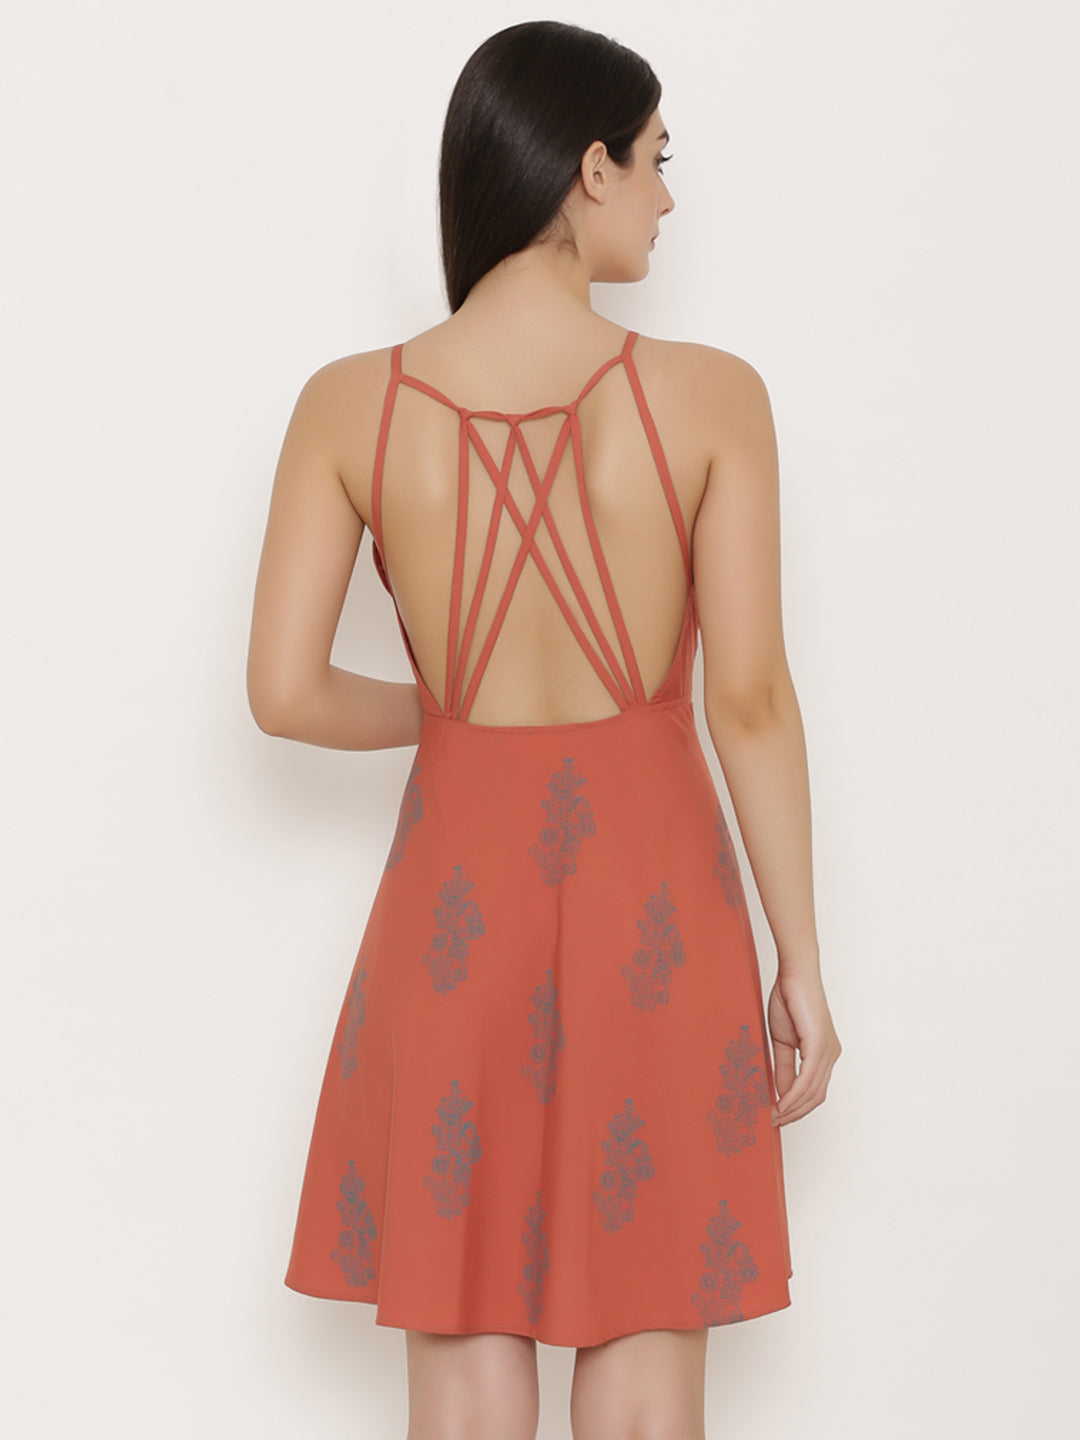 Backless with string design printed skater dress